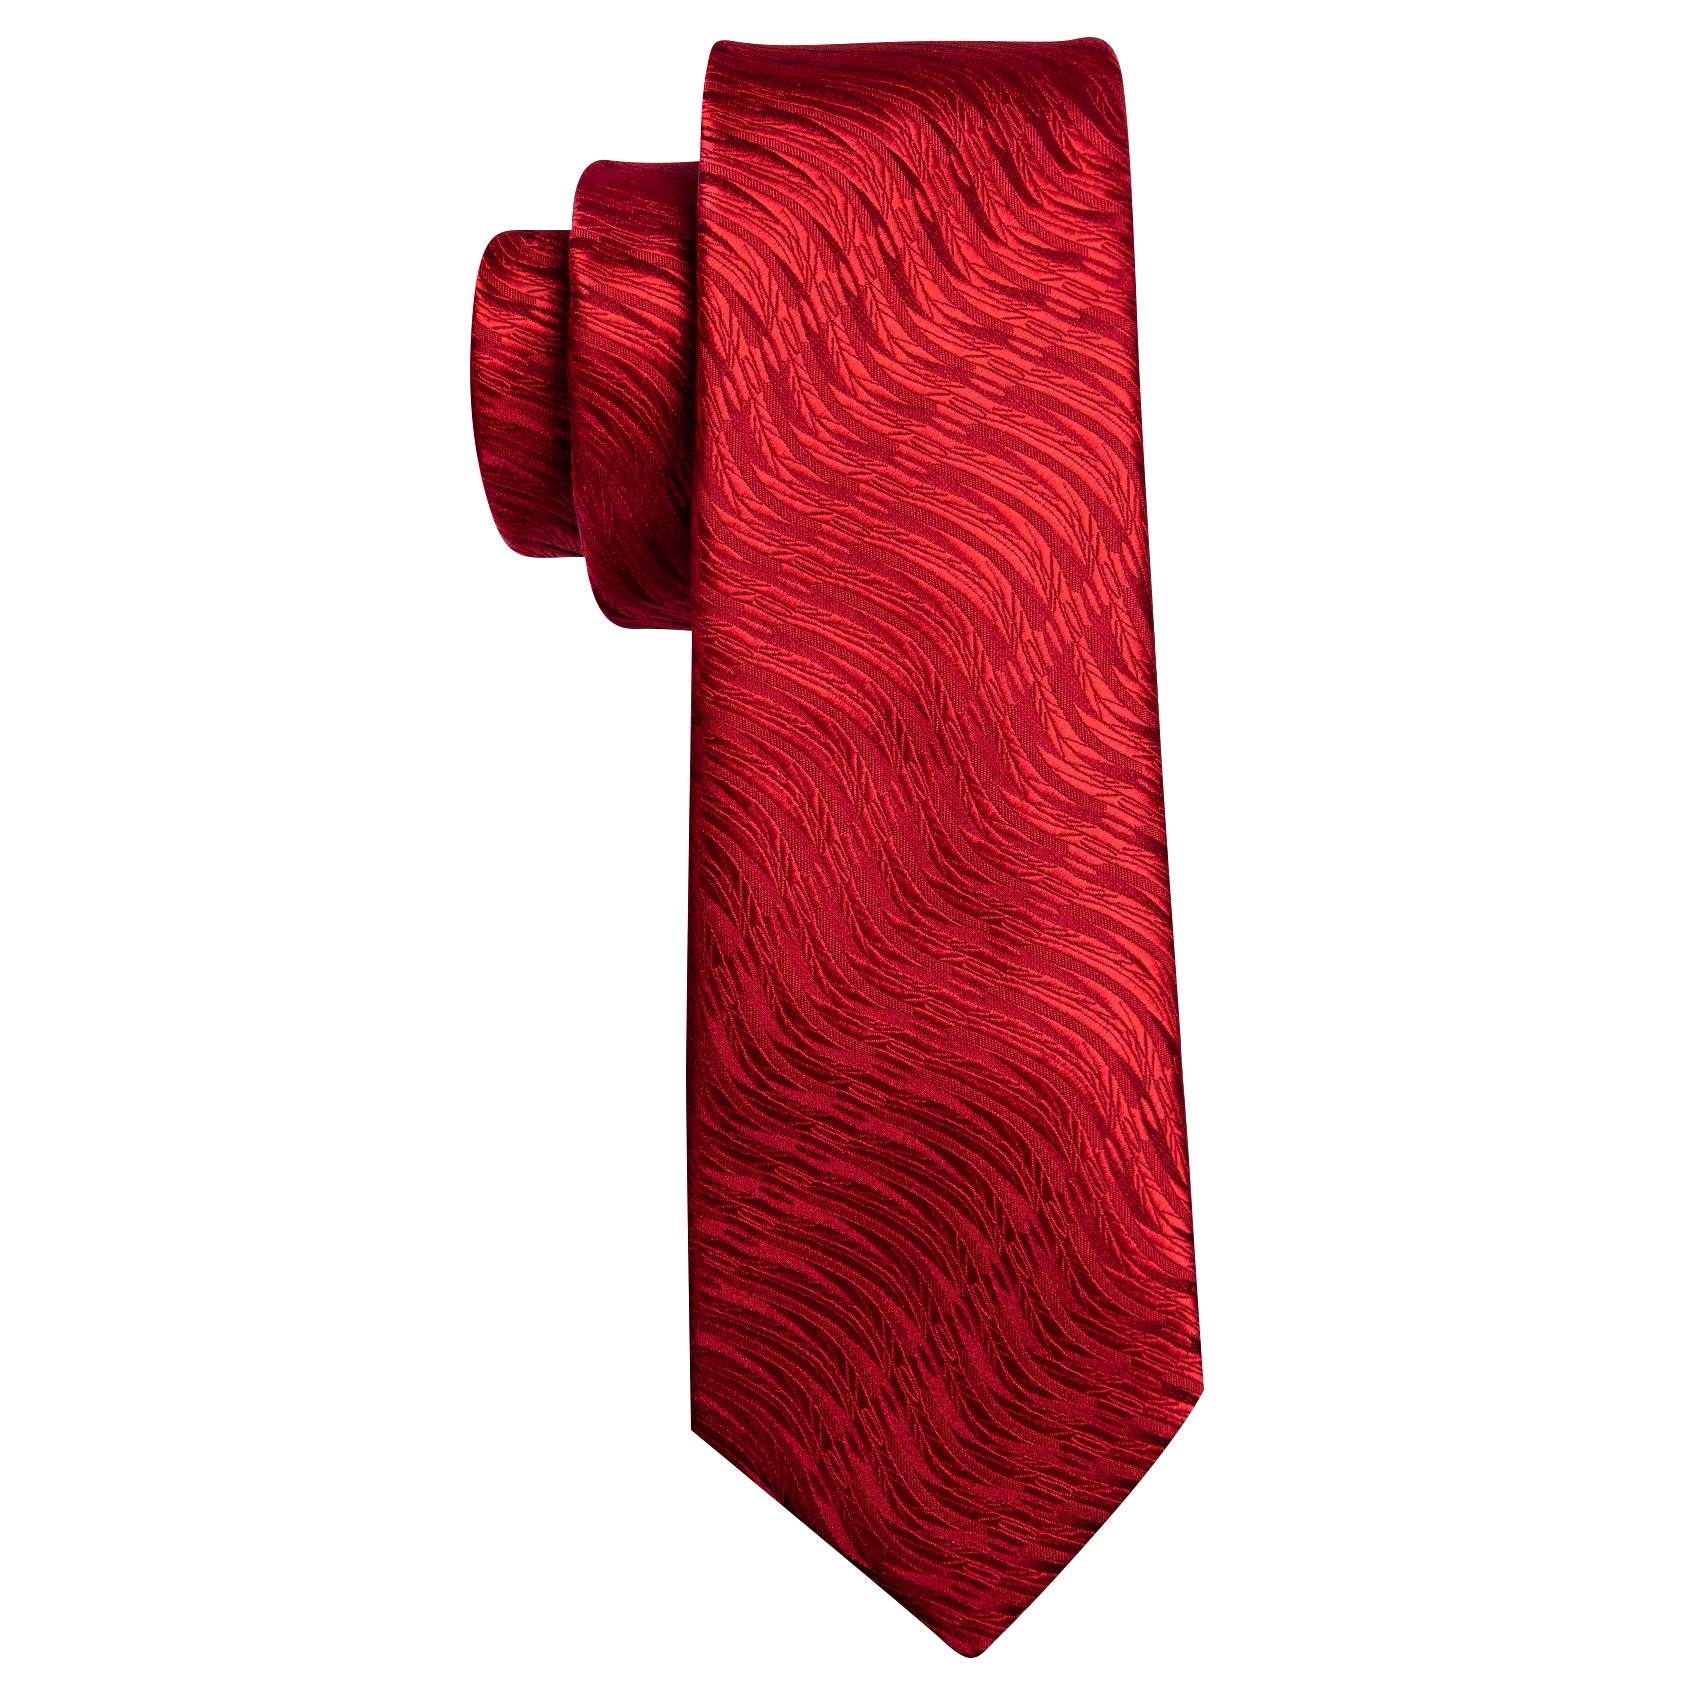 Red Floral Silk Tie Pocket Square Cufflinks Set